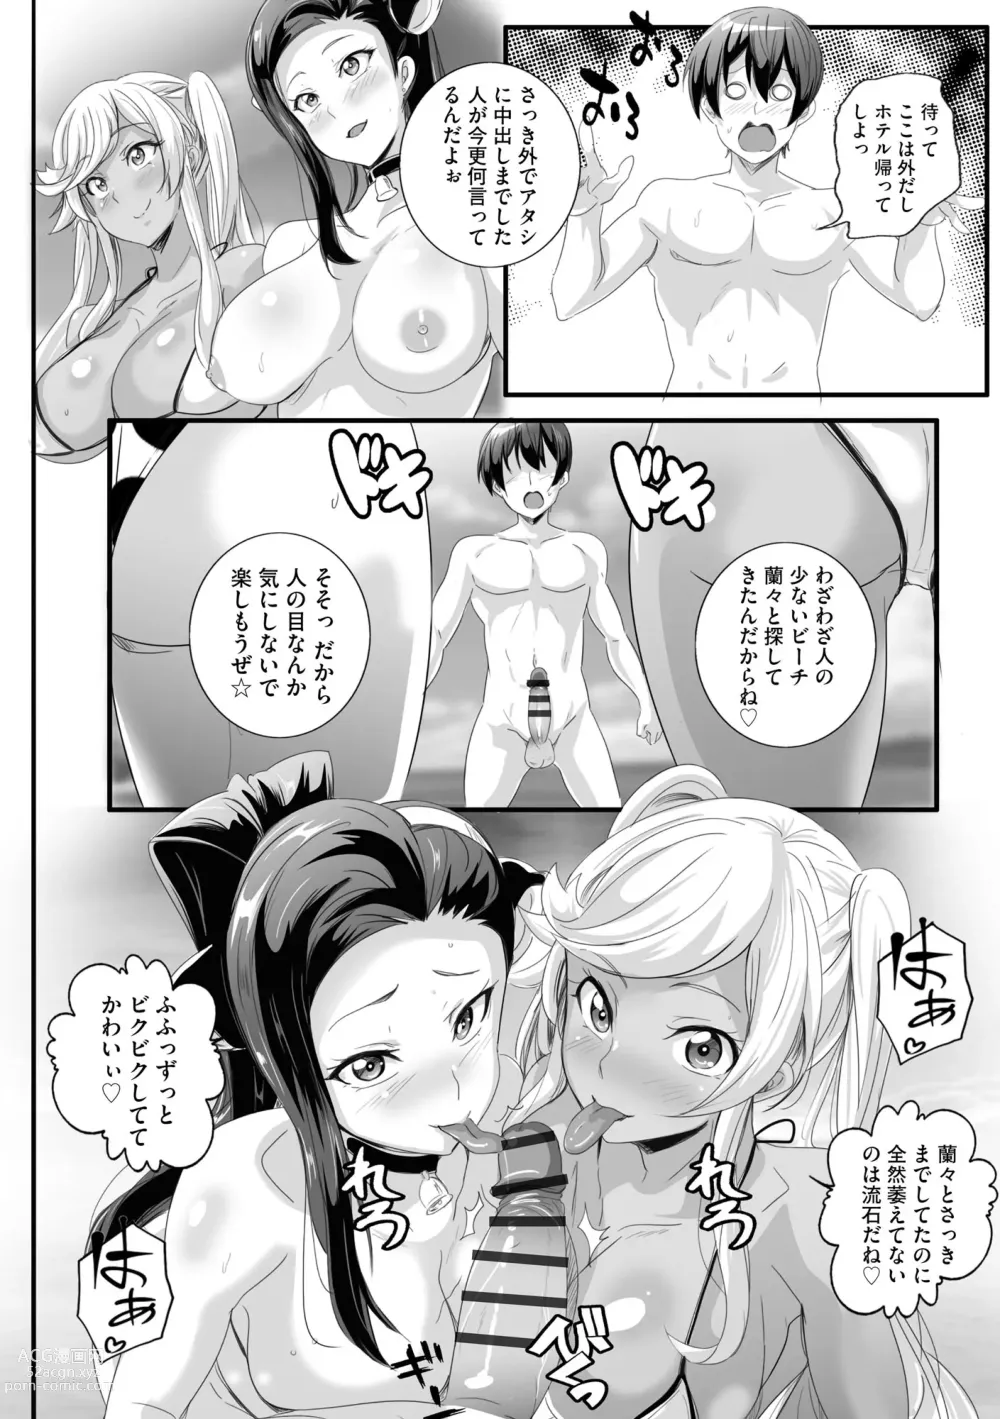 Page 24 of manga Cyberia Plus Vol. 13